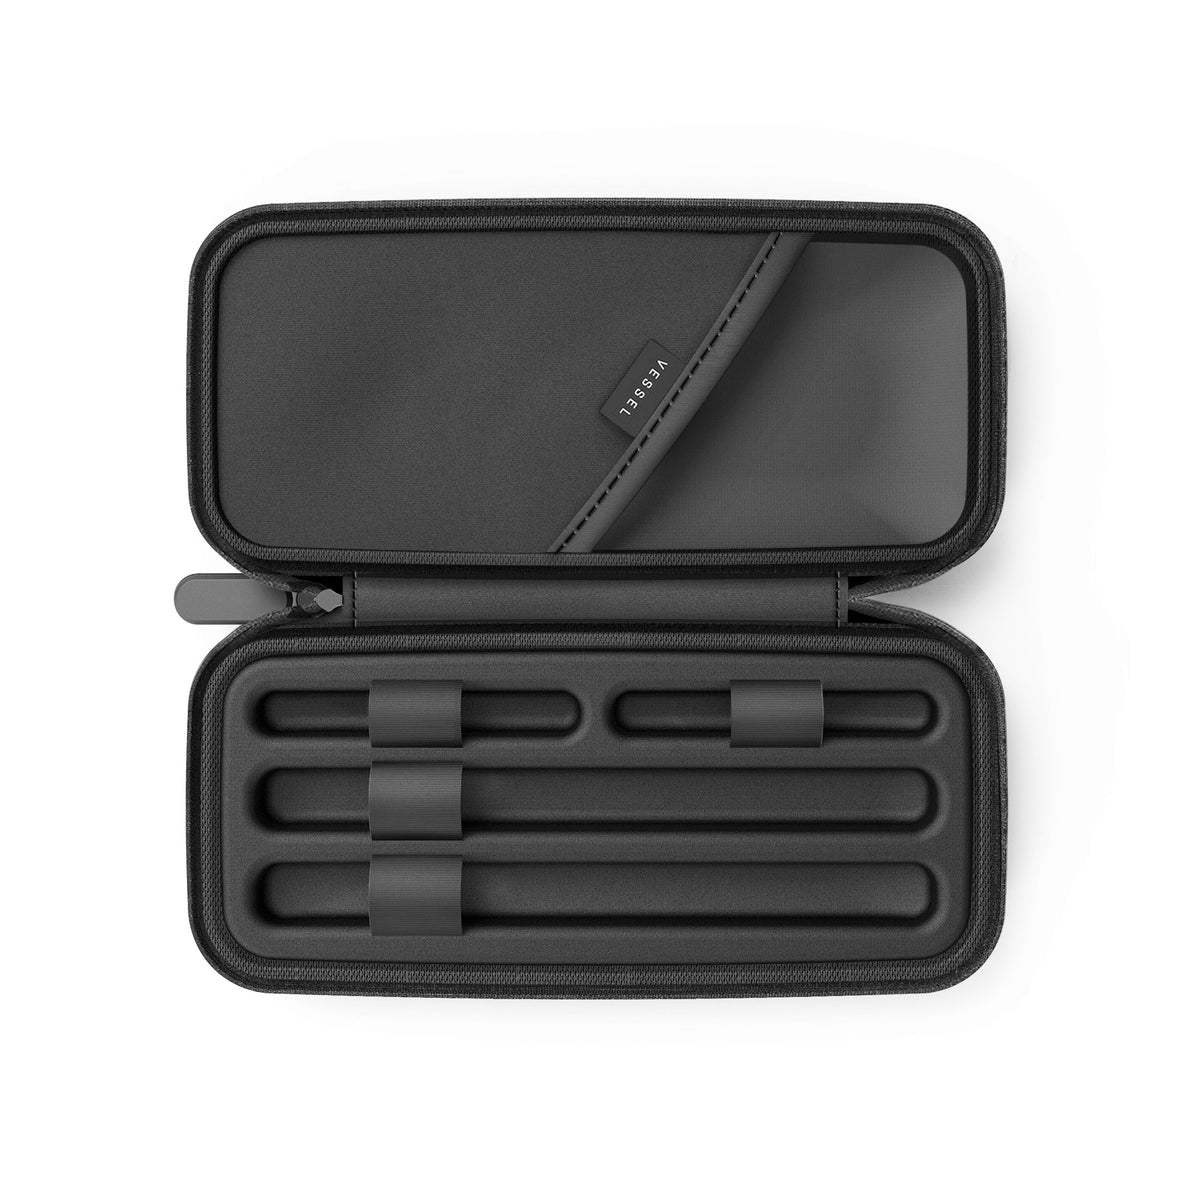 Vessel - Rover Case [Charcoal] - Storage for 510 Thread Vape Pen Batteries - Open